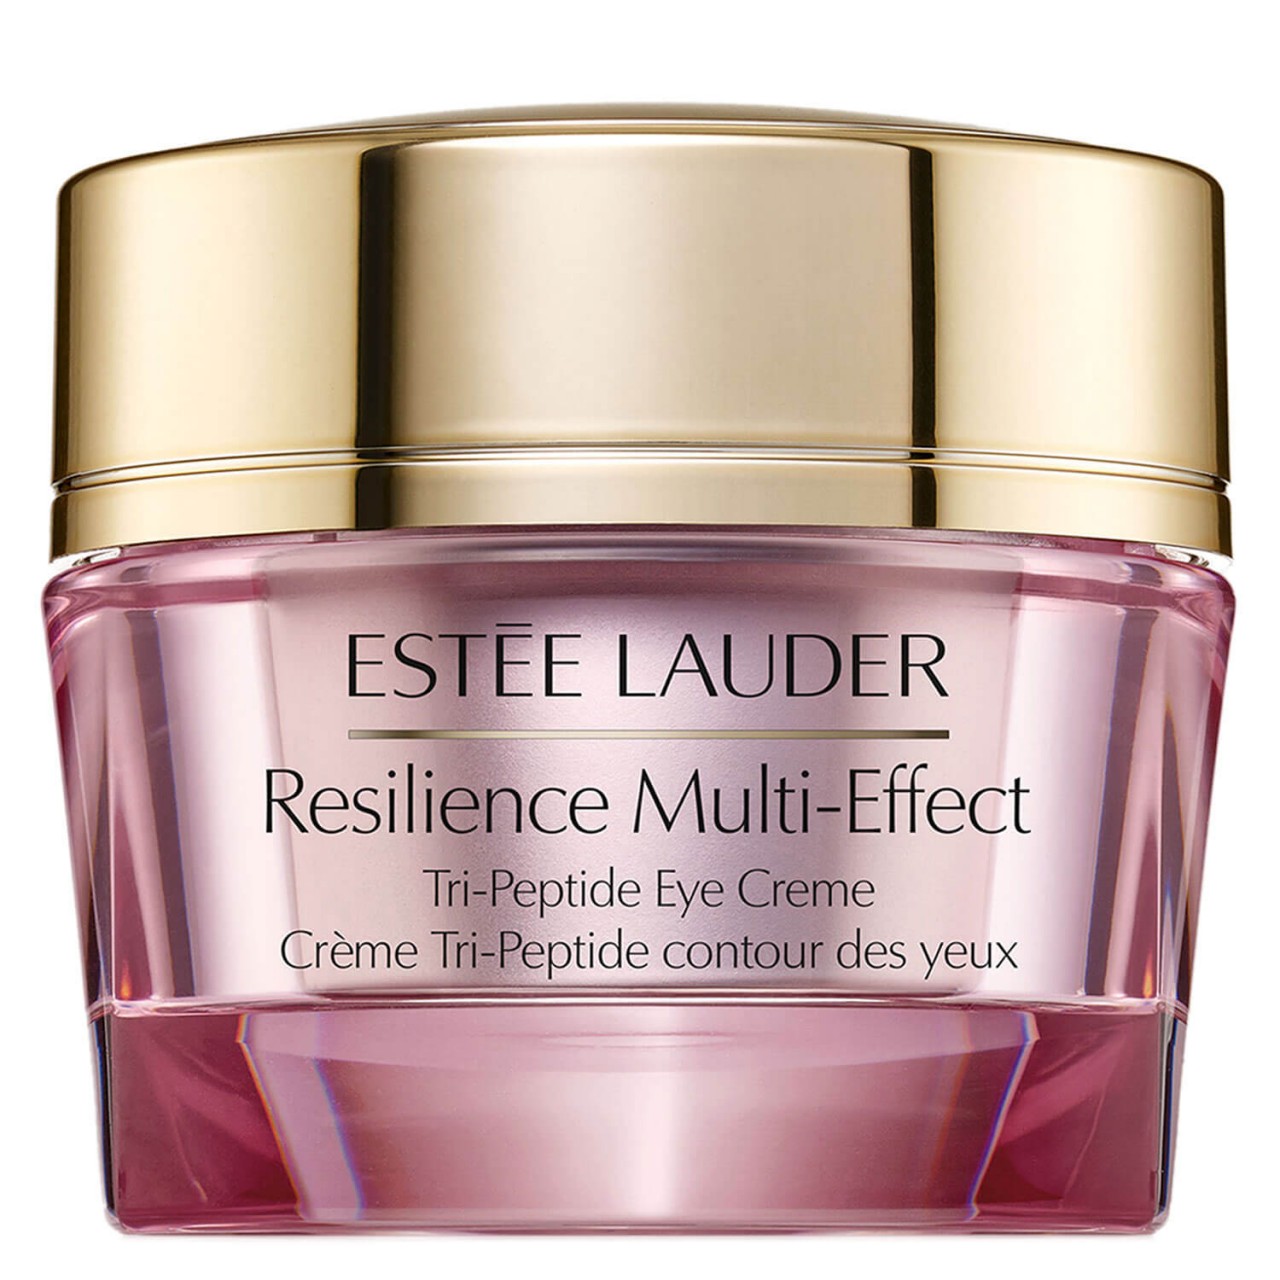 Estee Lauder - Resilience Multi-Effect